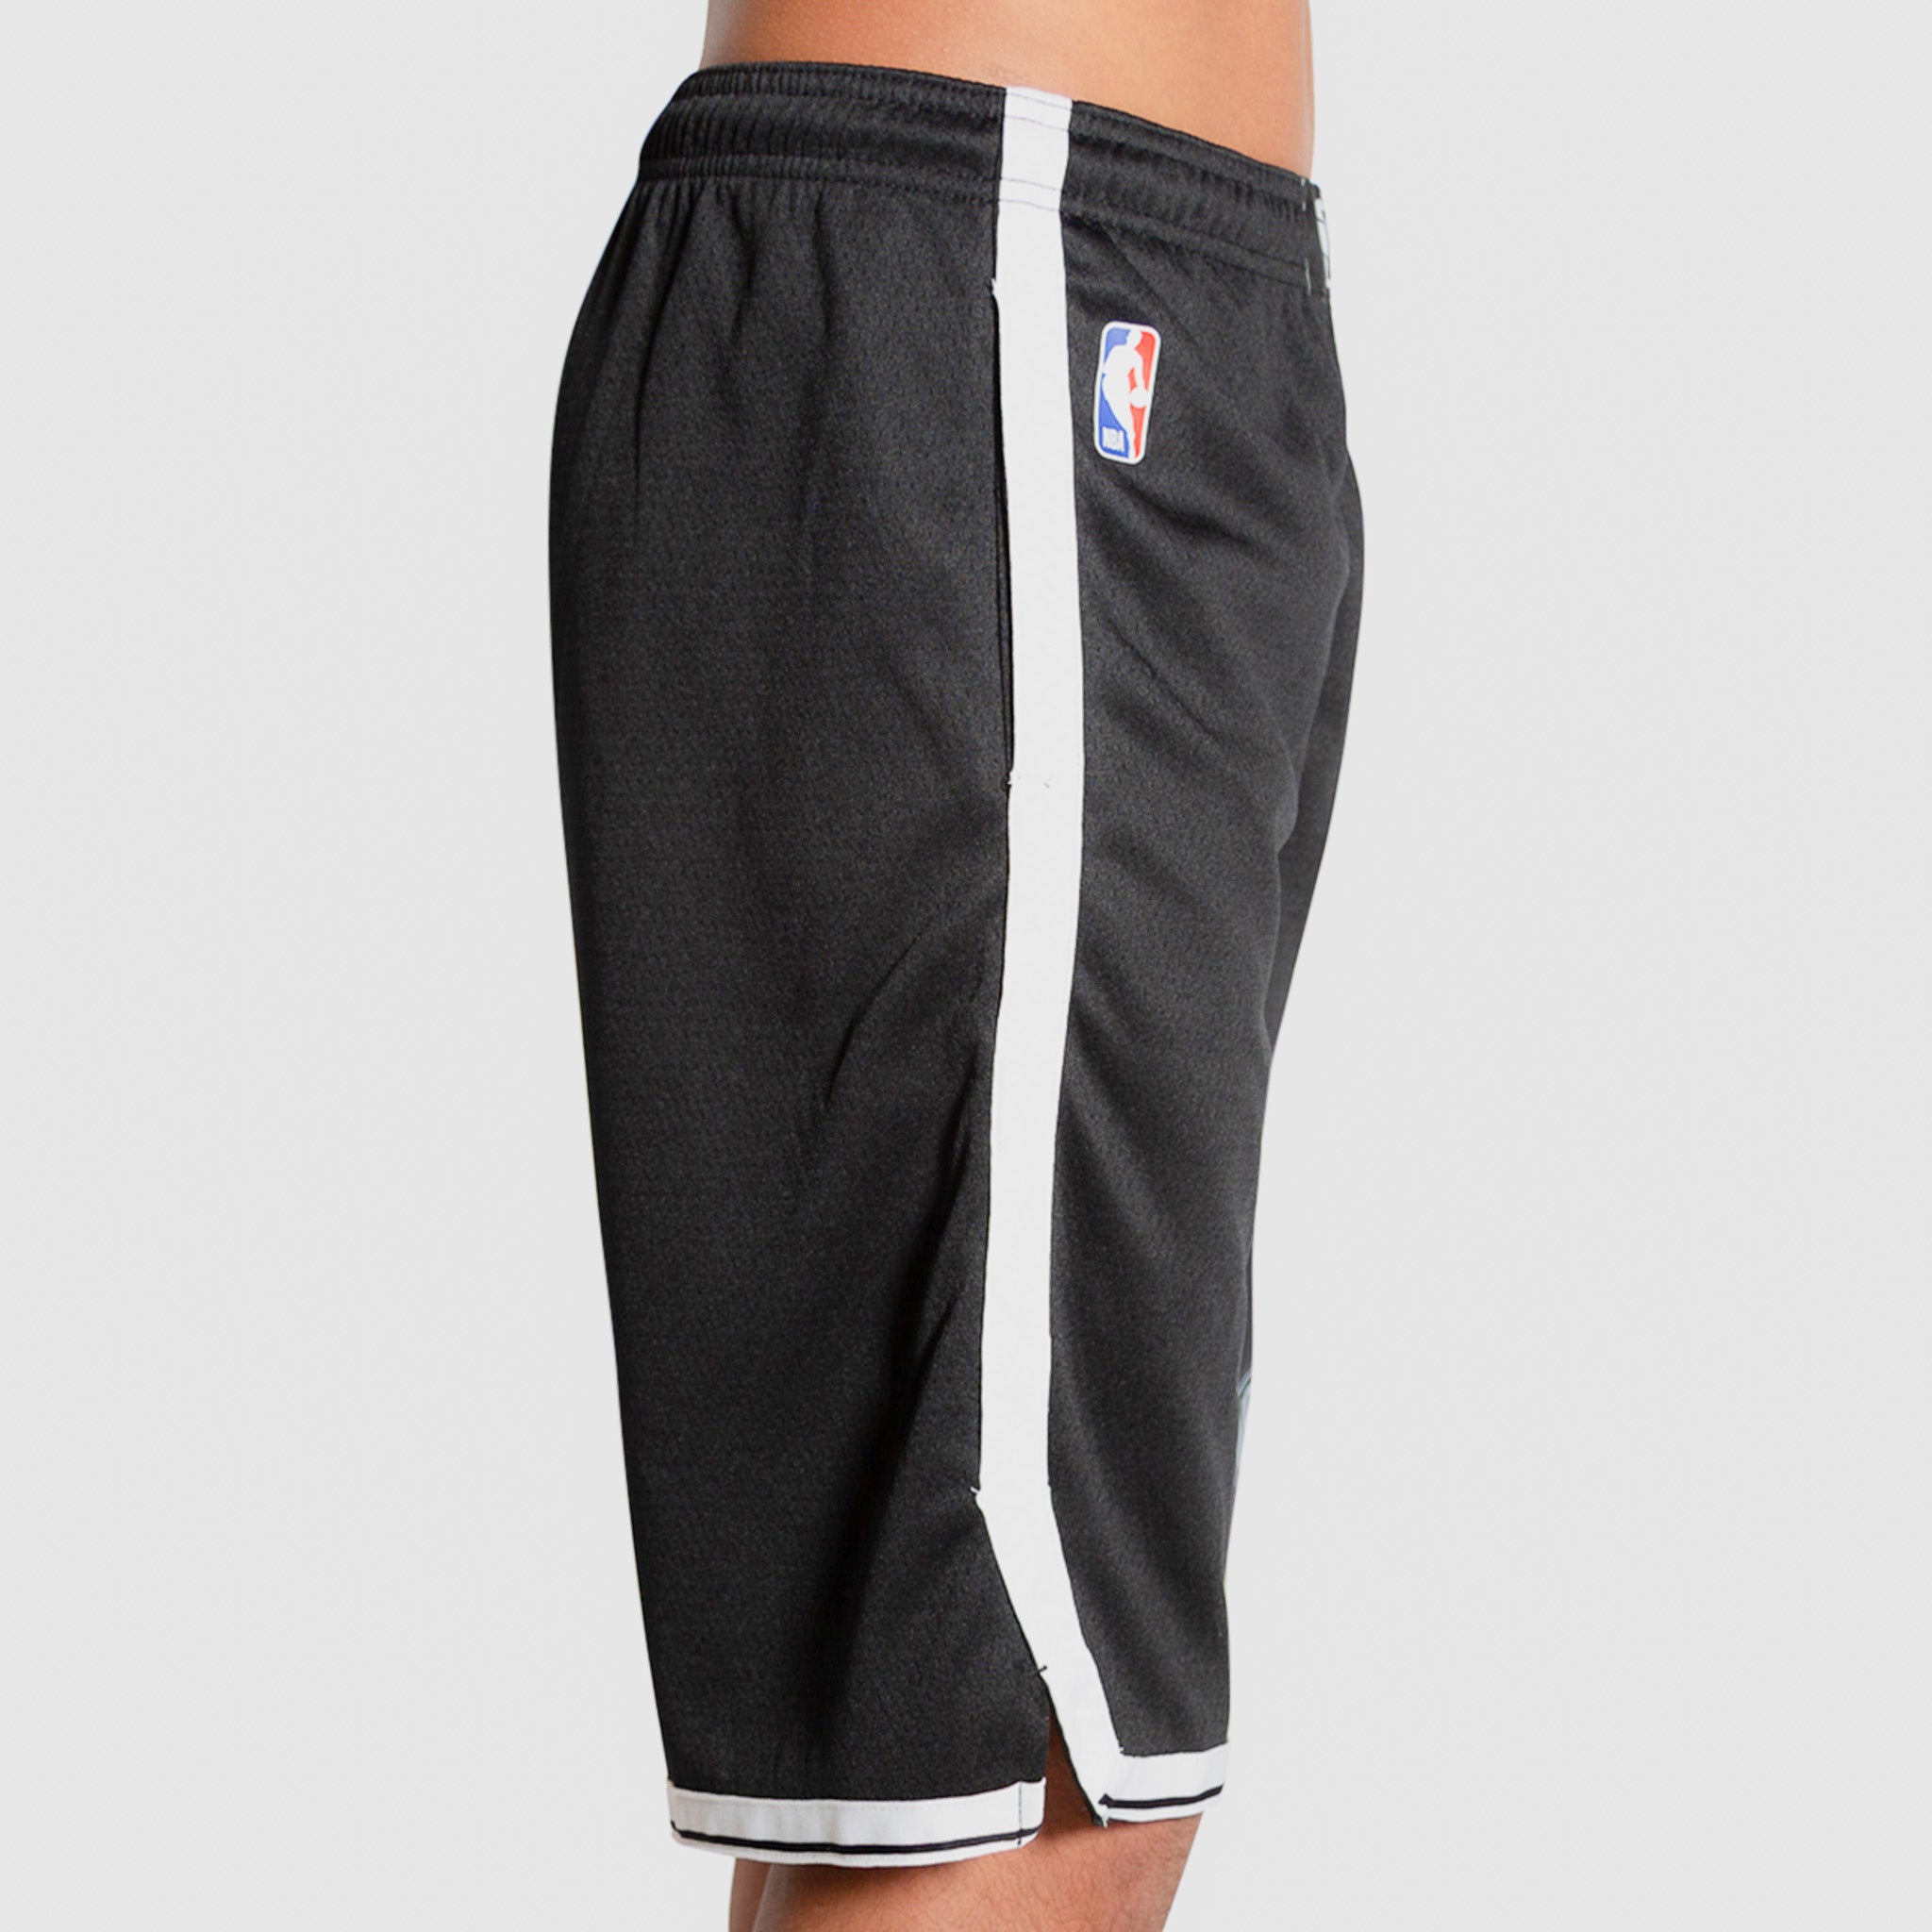 Nike Basketball NBA Brooklyn Nets Icon Edition unisex shorts in